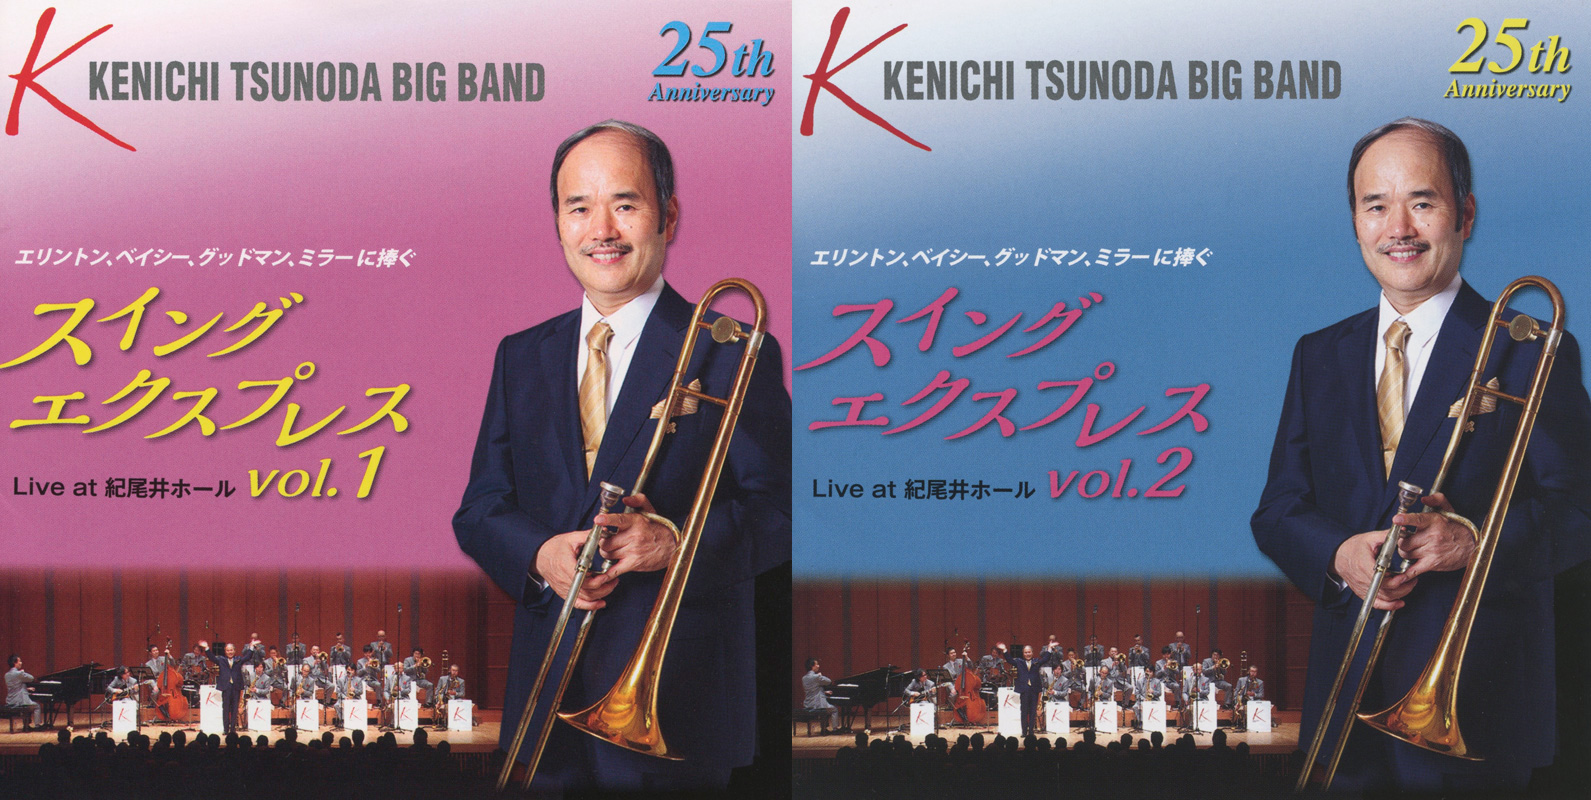 Kenichi Tsunoda Big Band - Swing Express: Volume 1 & Volume 2 (2015) [Japan] SACD ISO + FLAC 24bit/48kHz